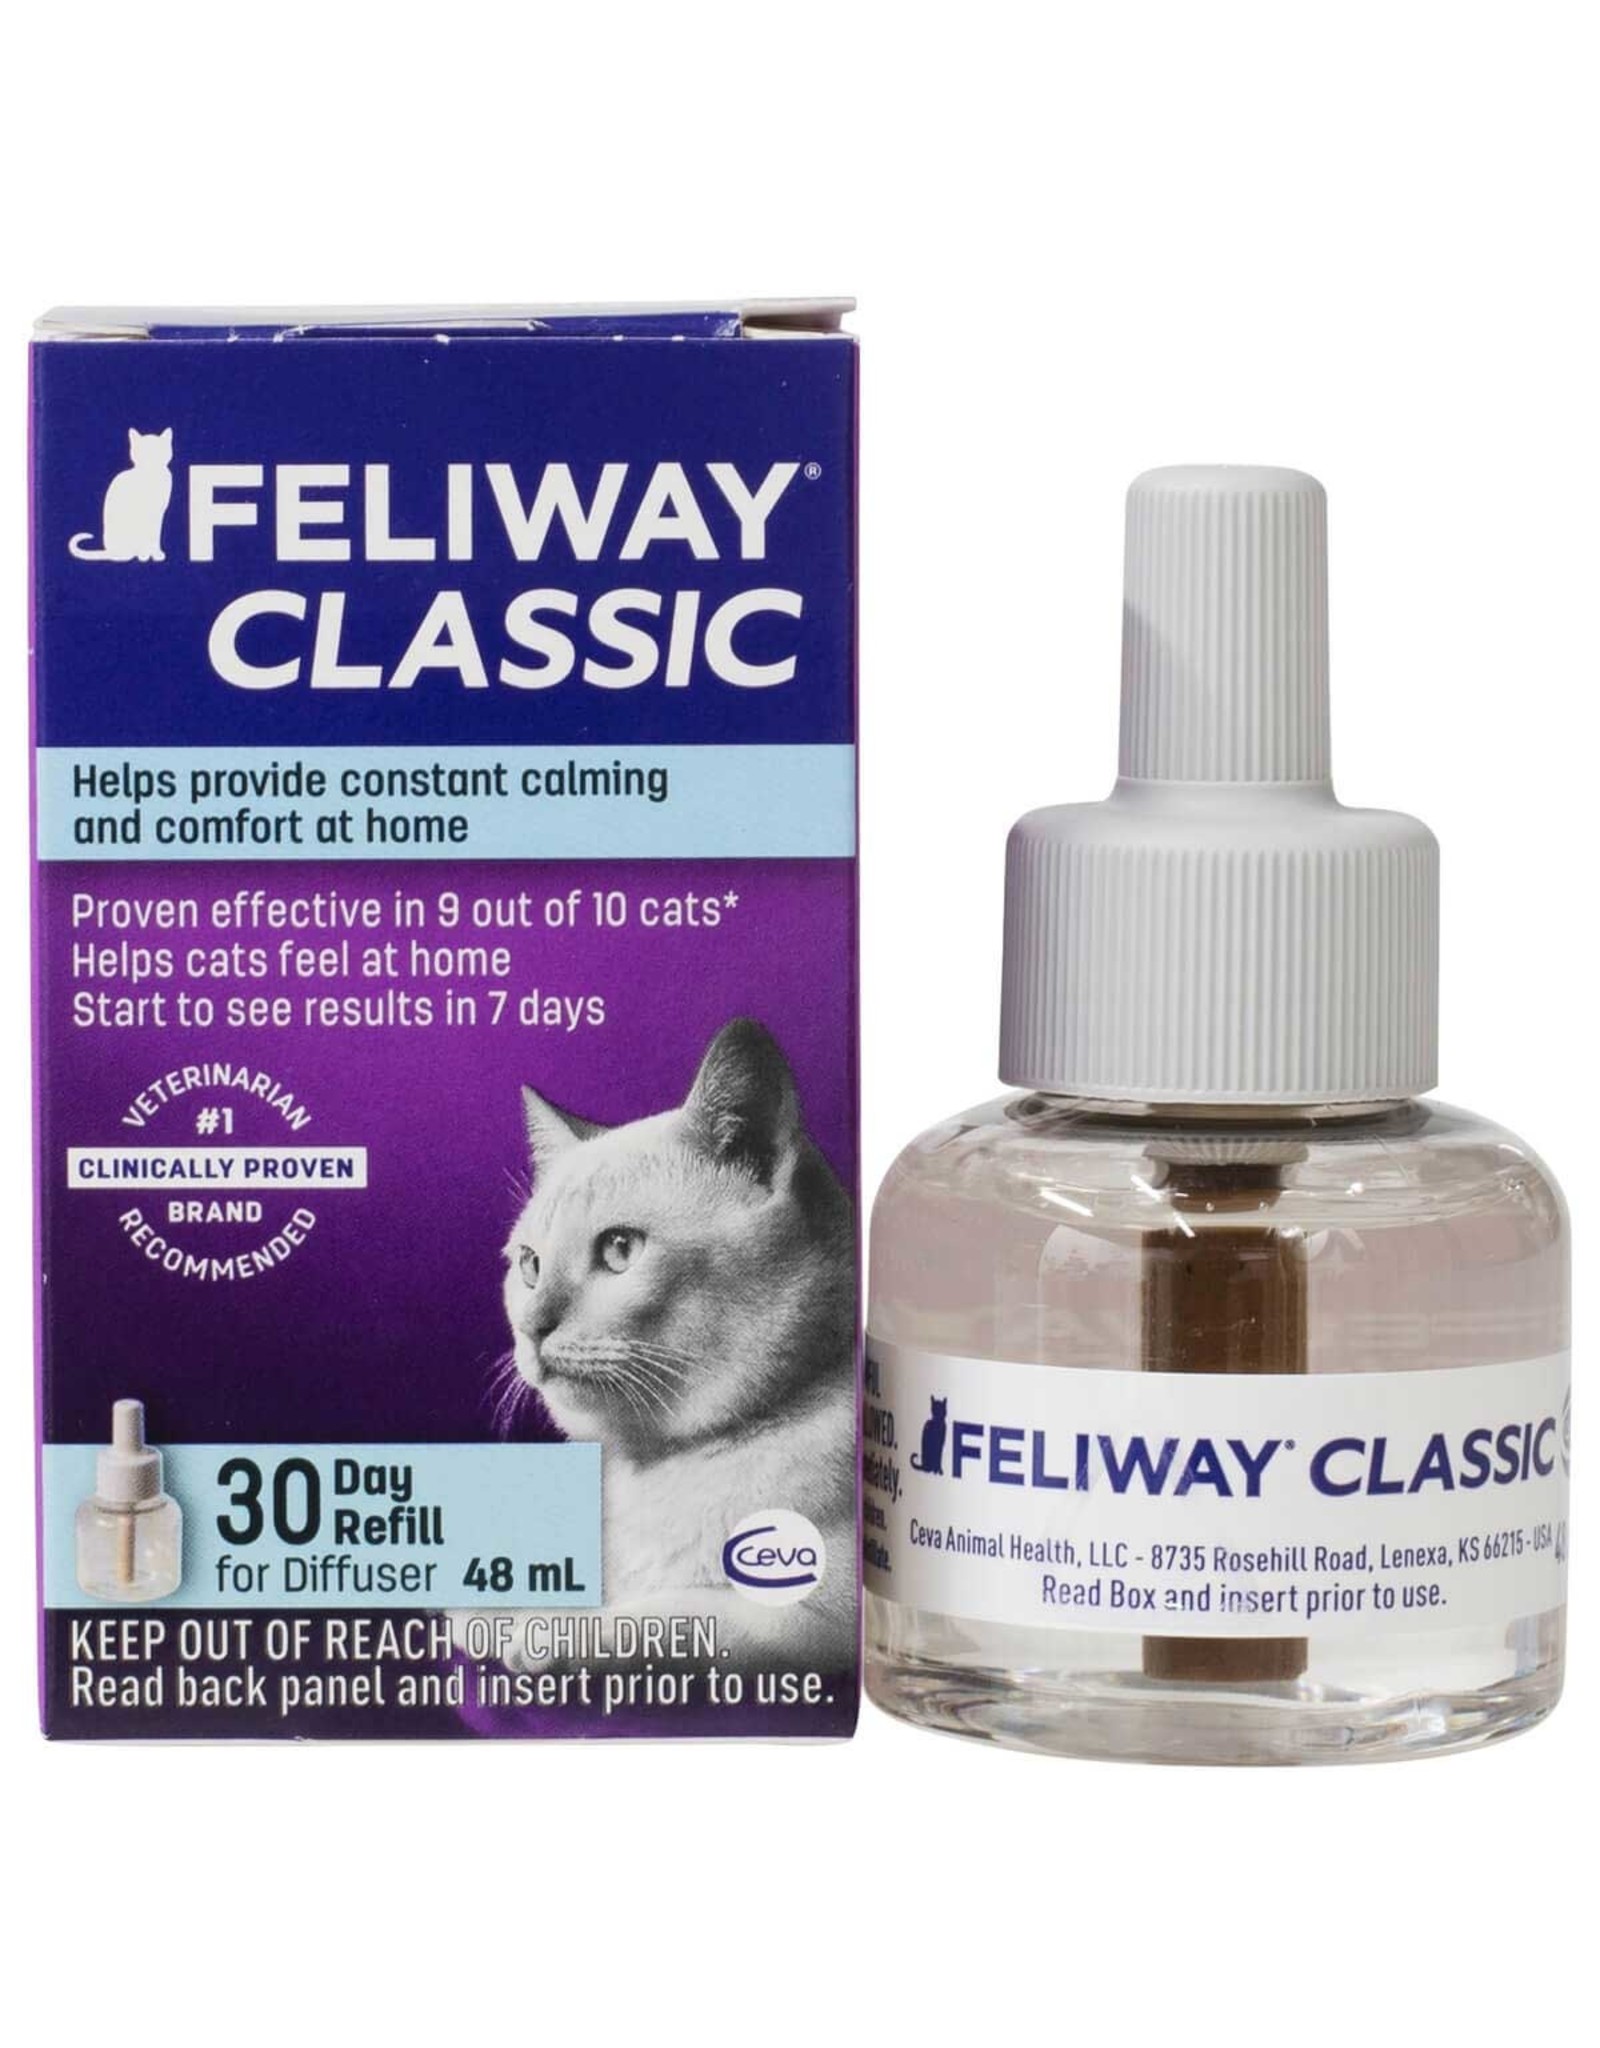 Feliway Feliway Cat Home Diffuser 30 Day Refill